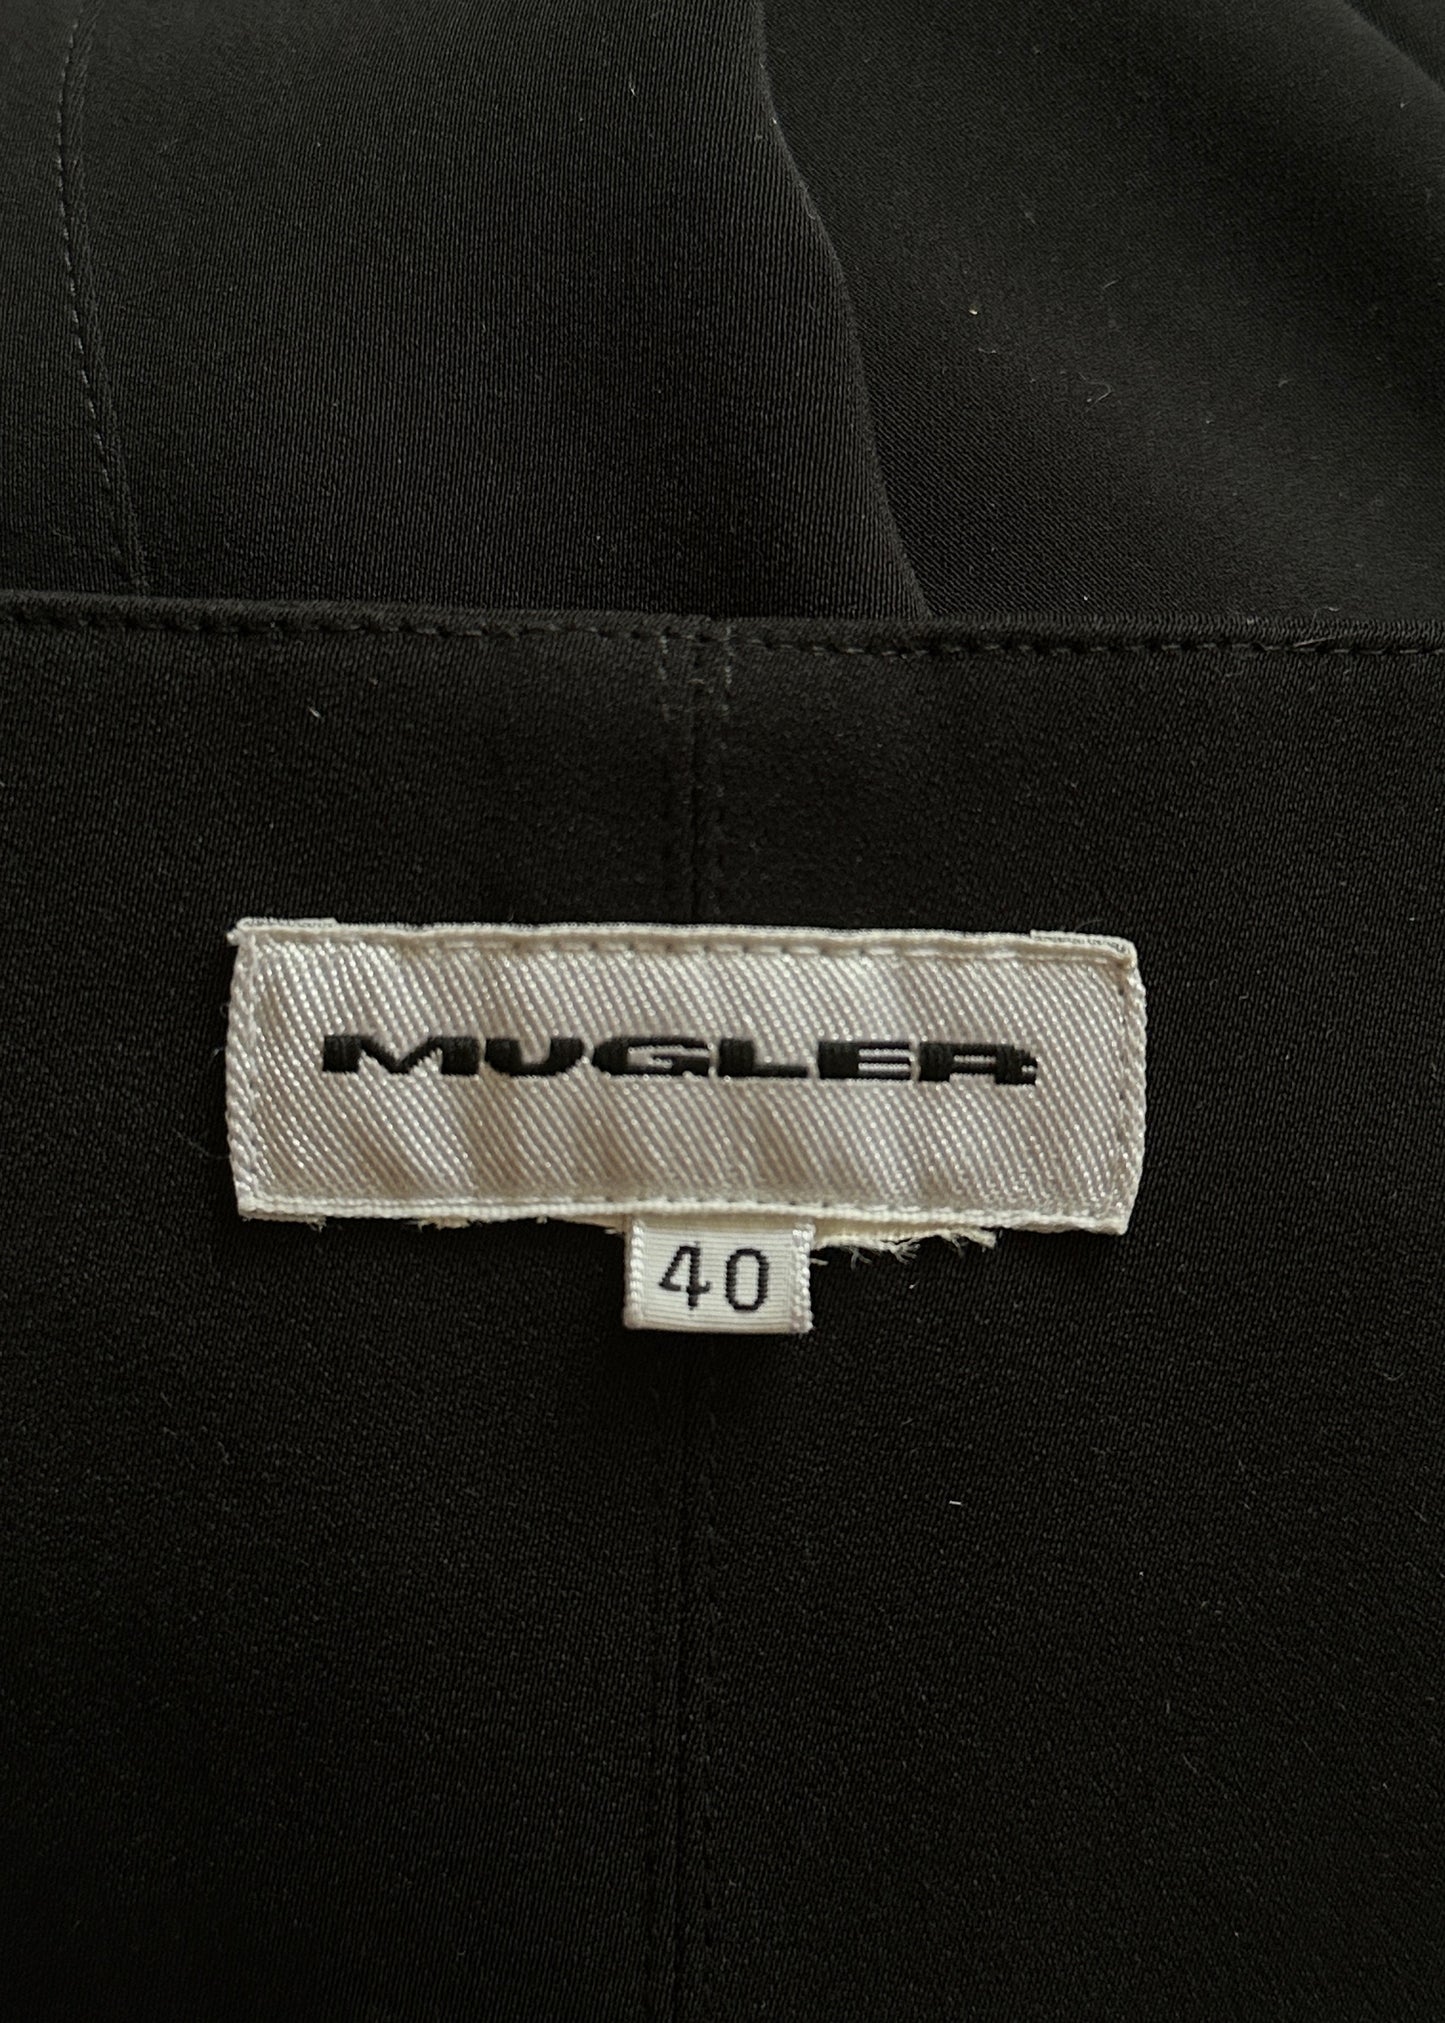 Thierry Mugler Fall 2002 Black Belted Dress